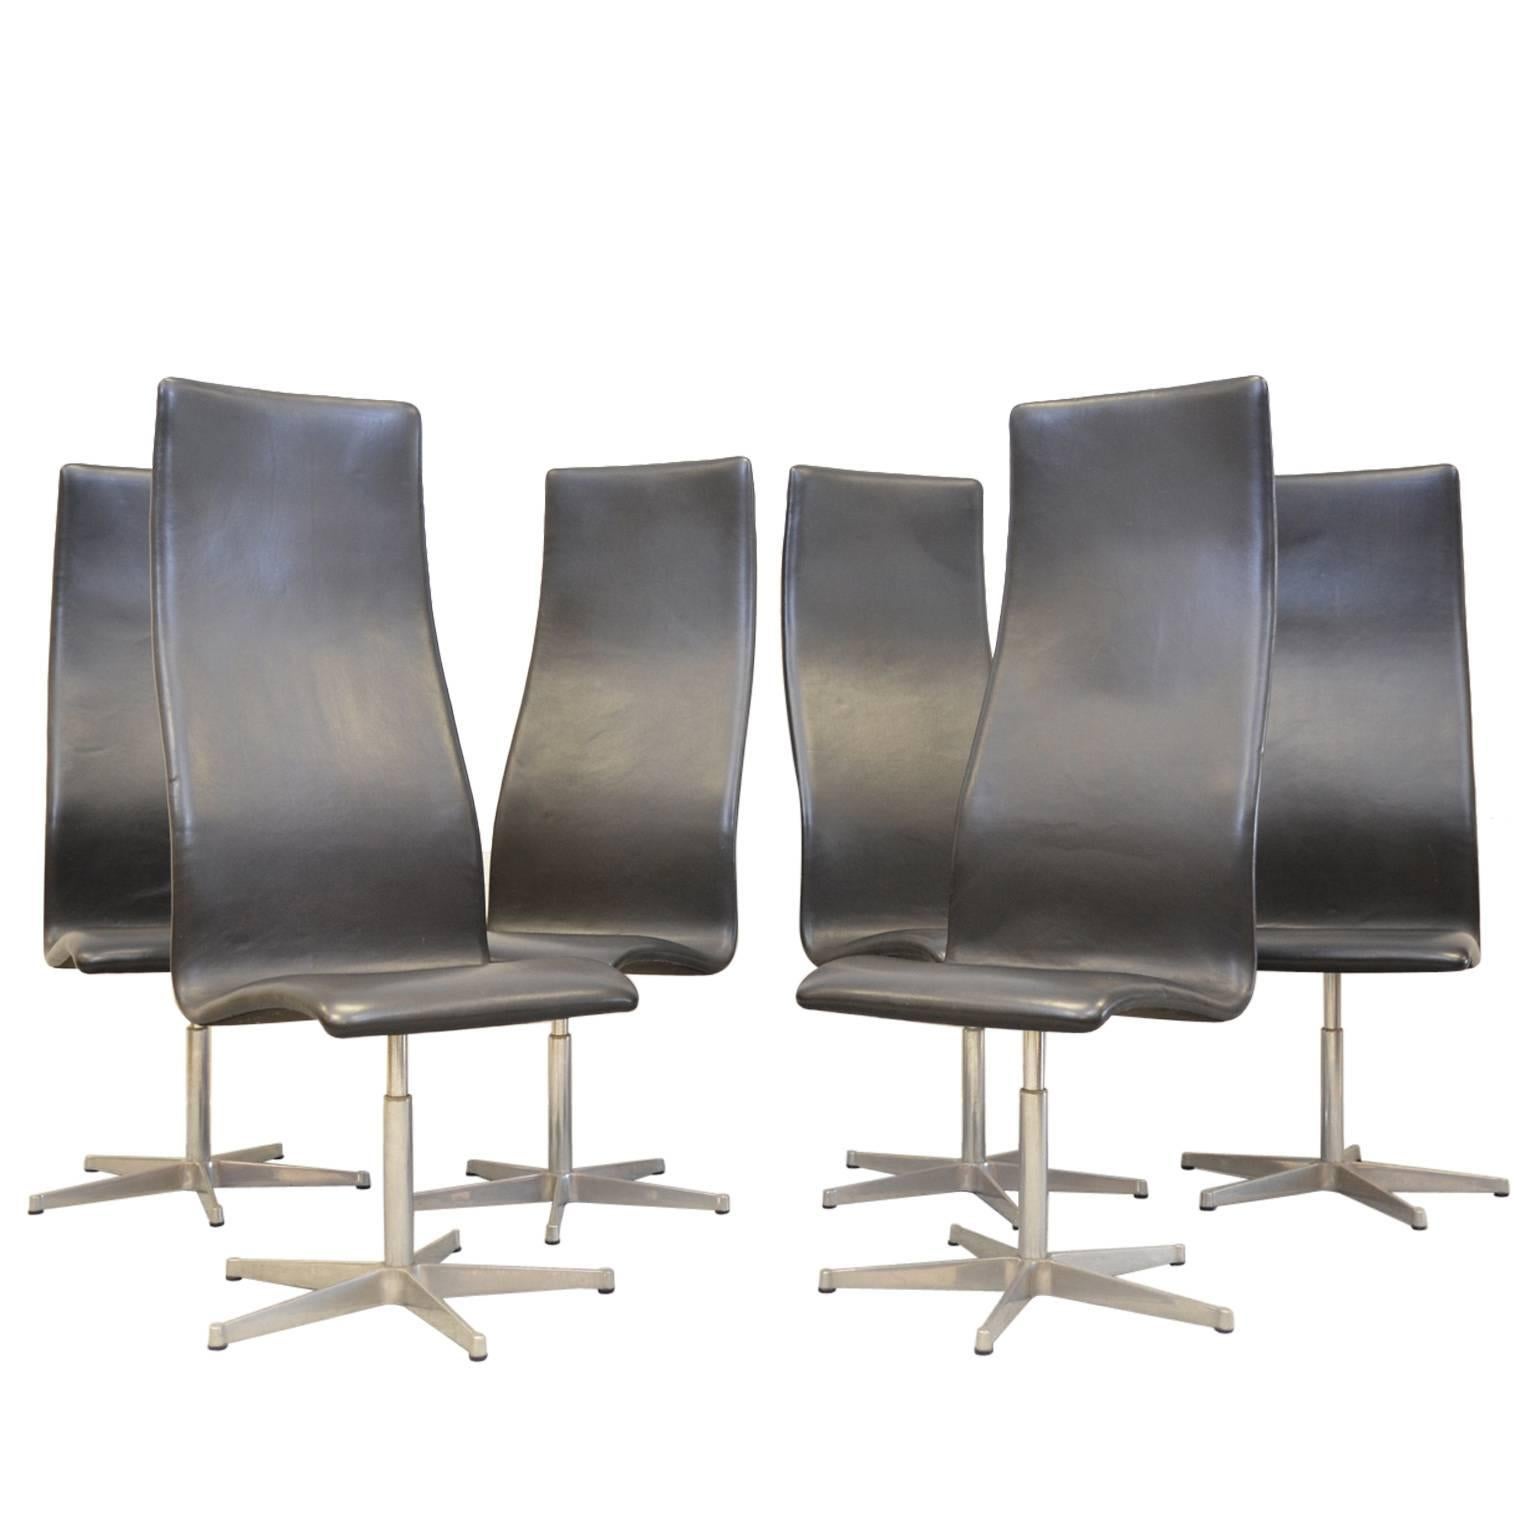 MidcenturyBlack Leather Oxford Chairs by Arne Jacobsen for Fritz Hansen, Denmark